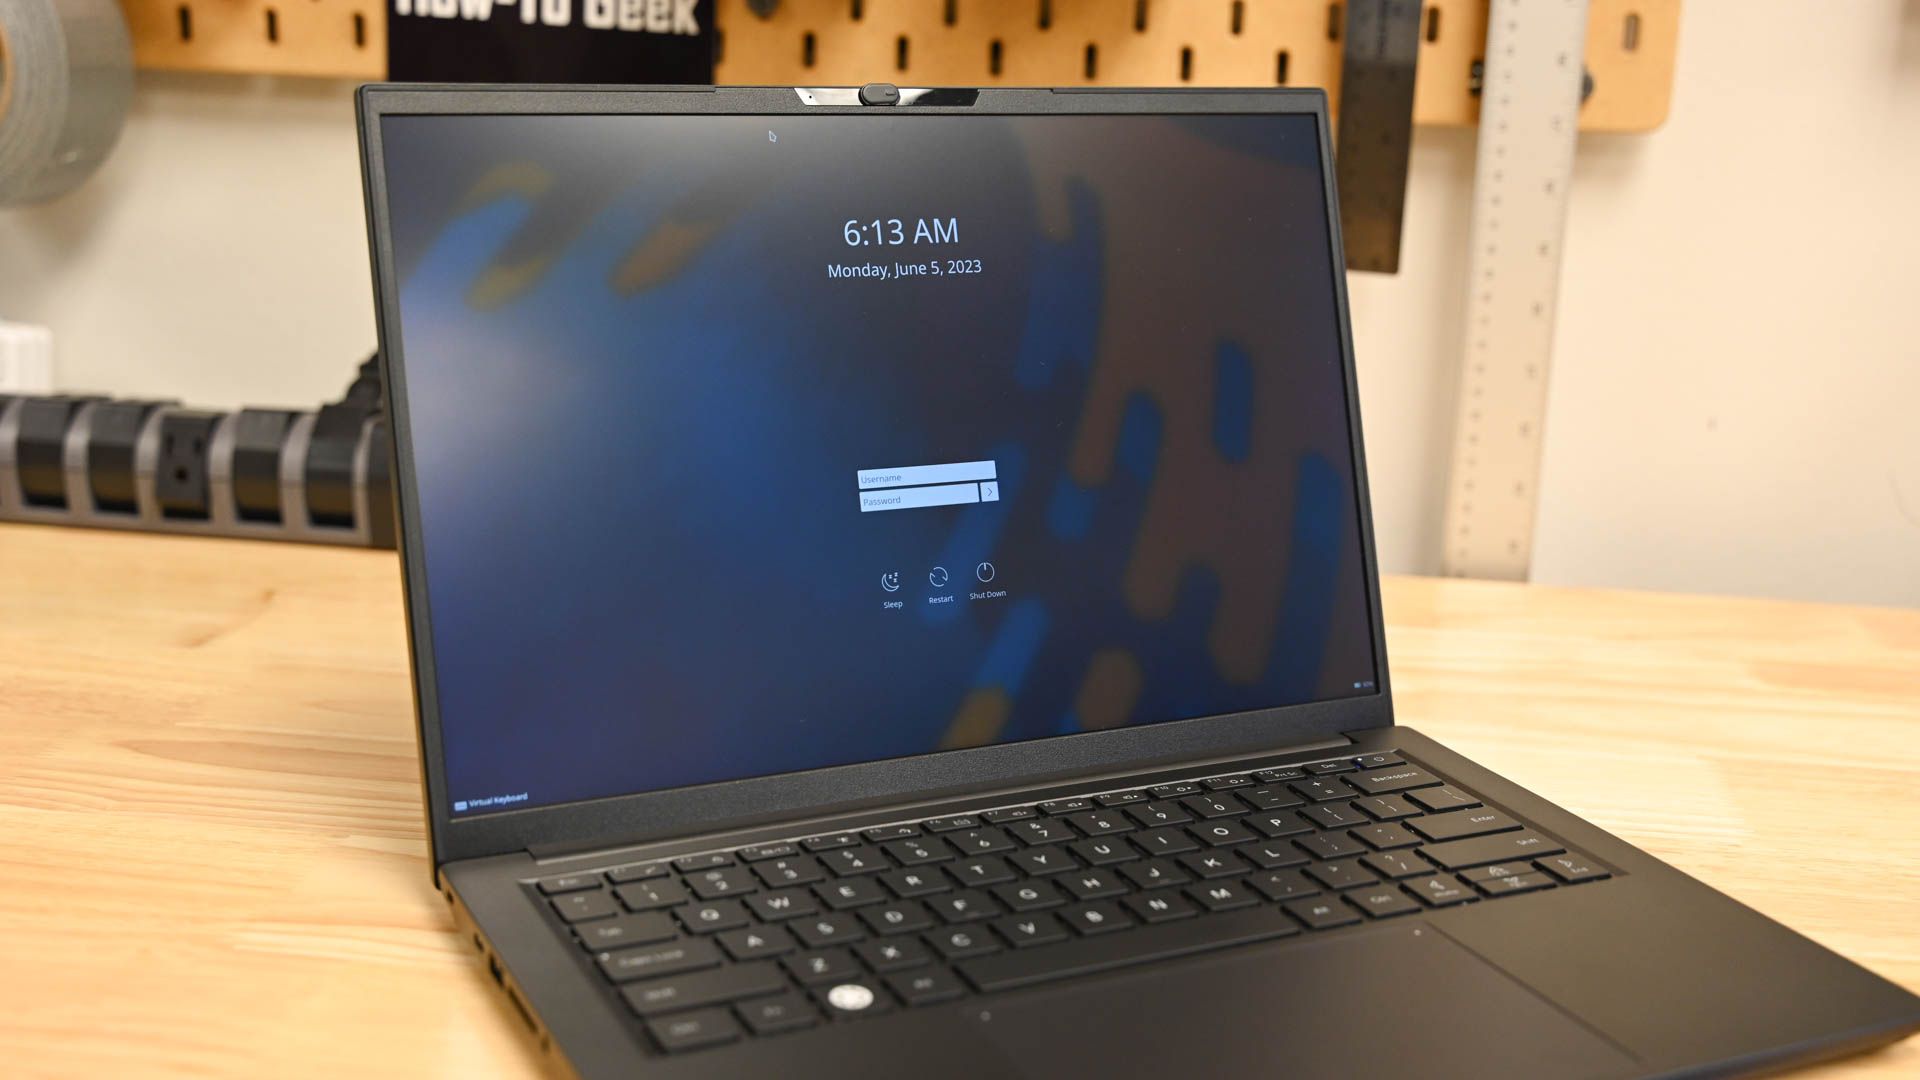 A Linux laptop's login screen. 